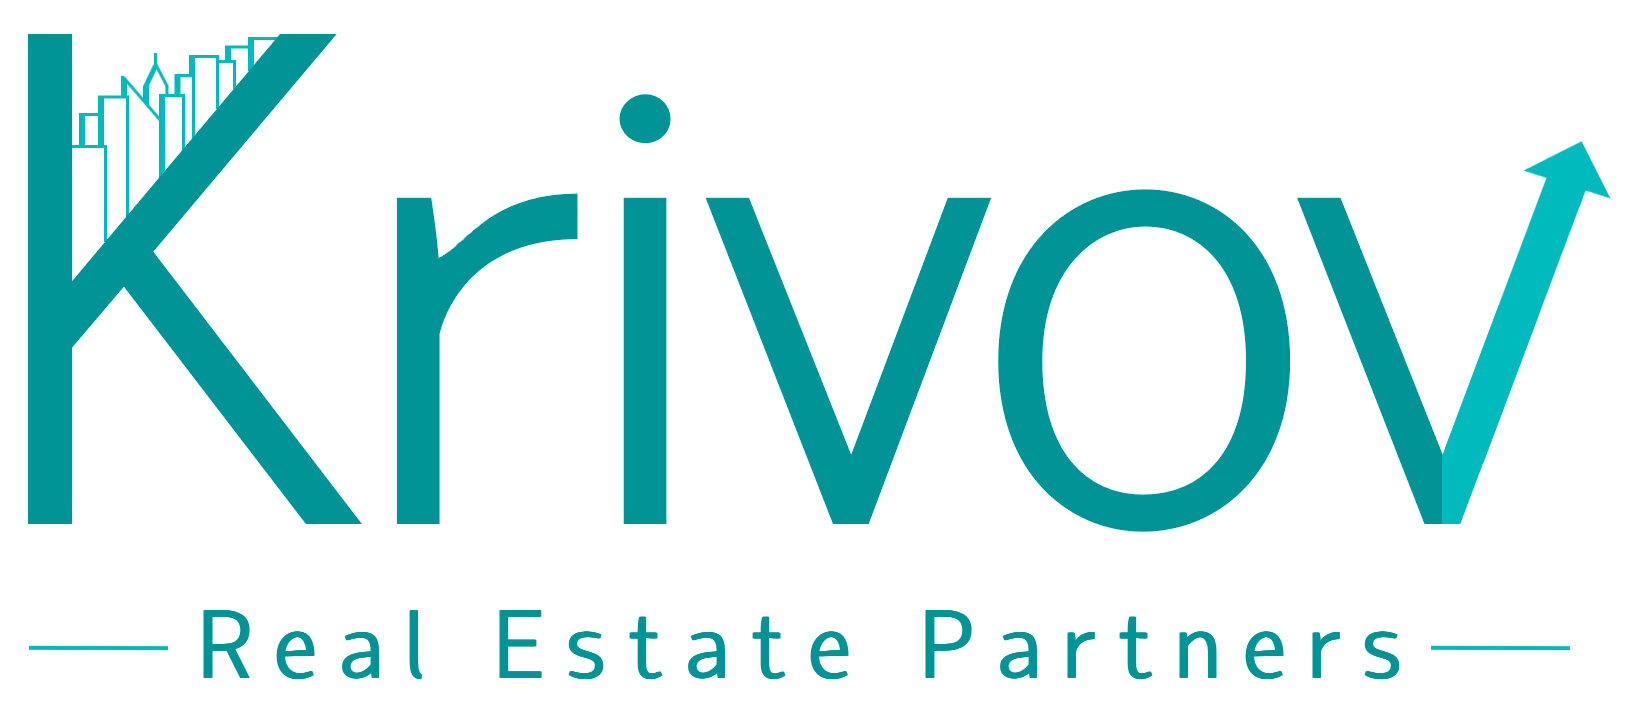 Krivov Real Estate Partners